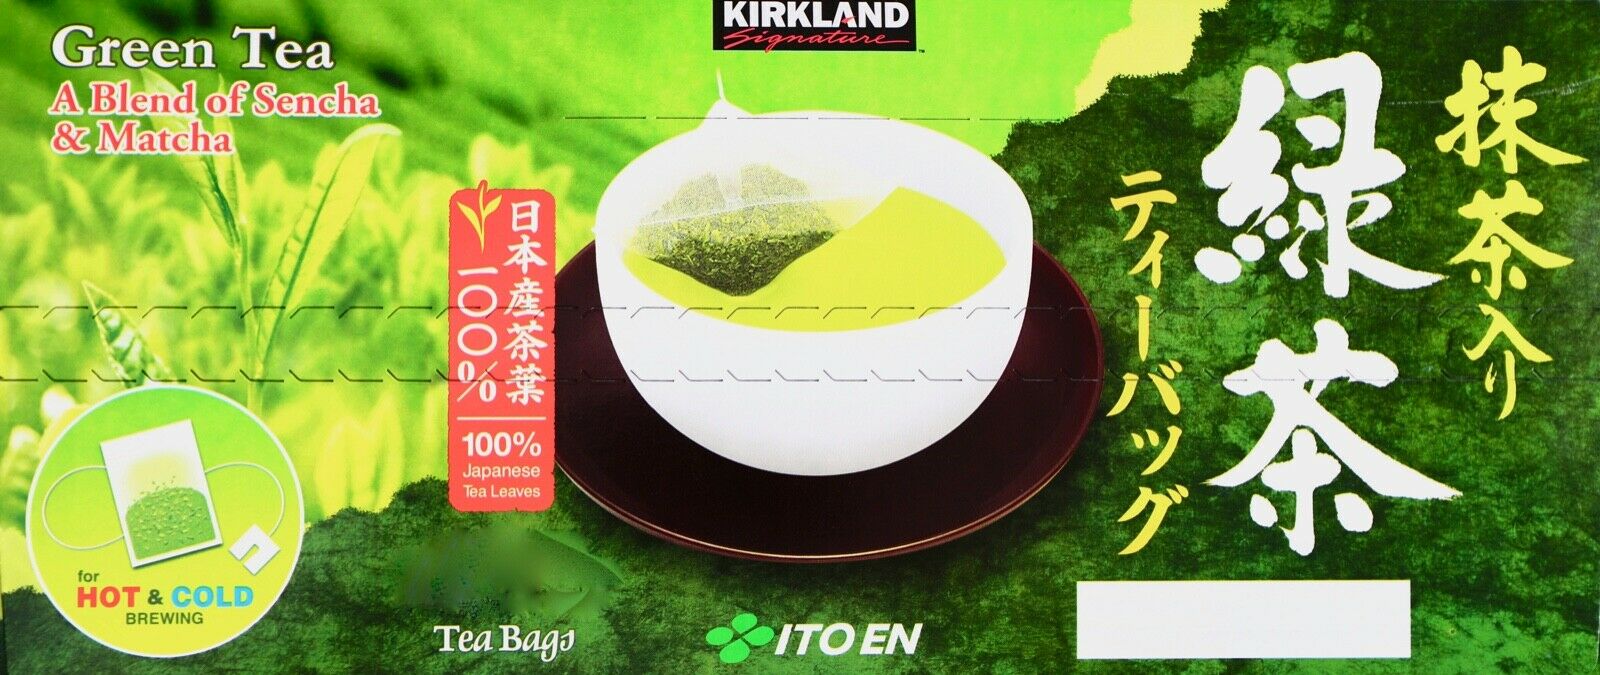 Kirkland Signature Ito En Japanese Green Tea Sencha & Matcha Individually Sealed